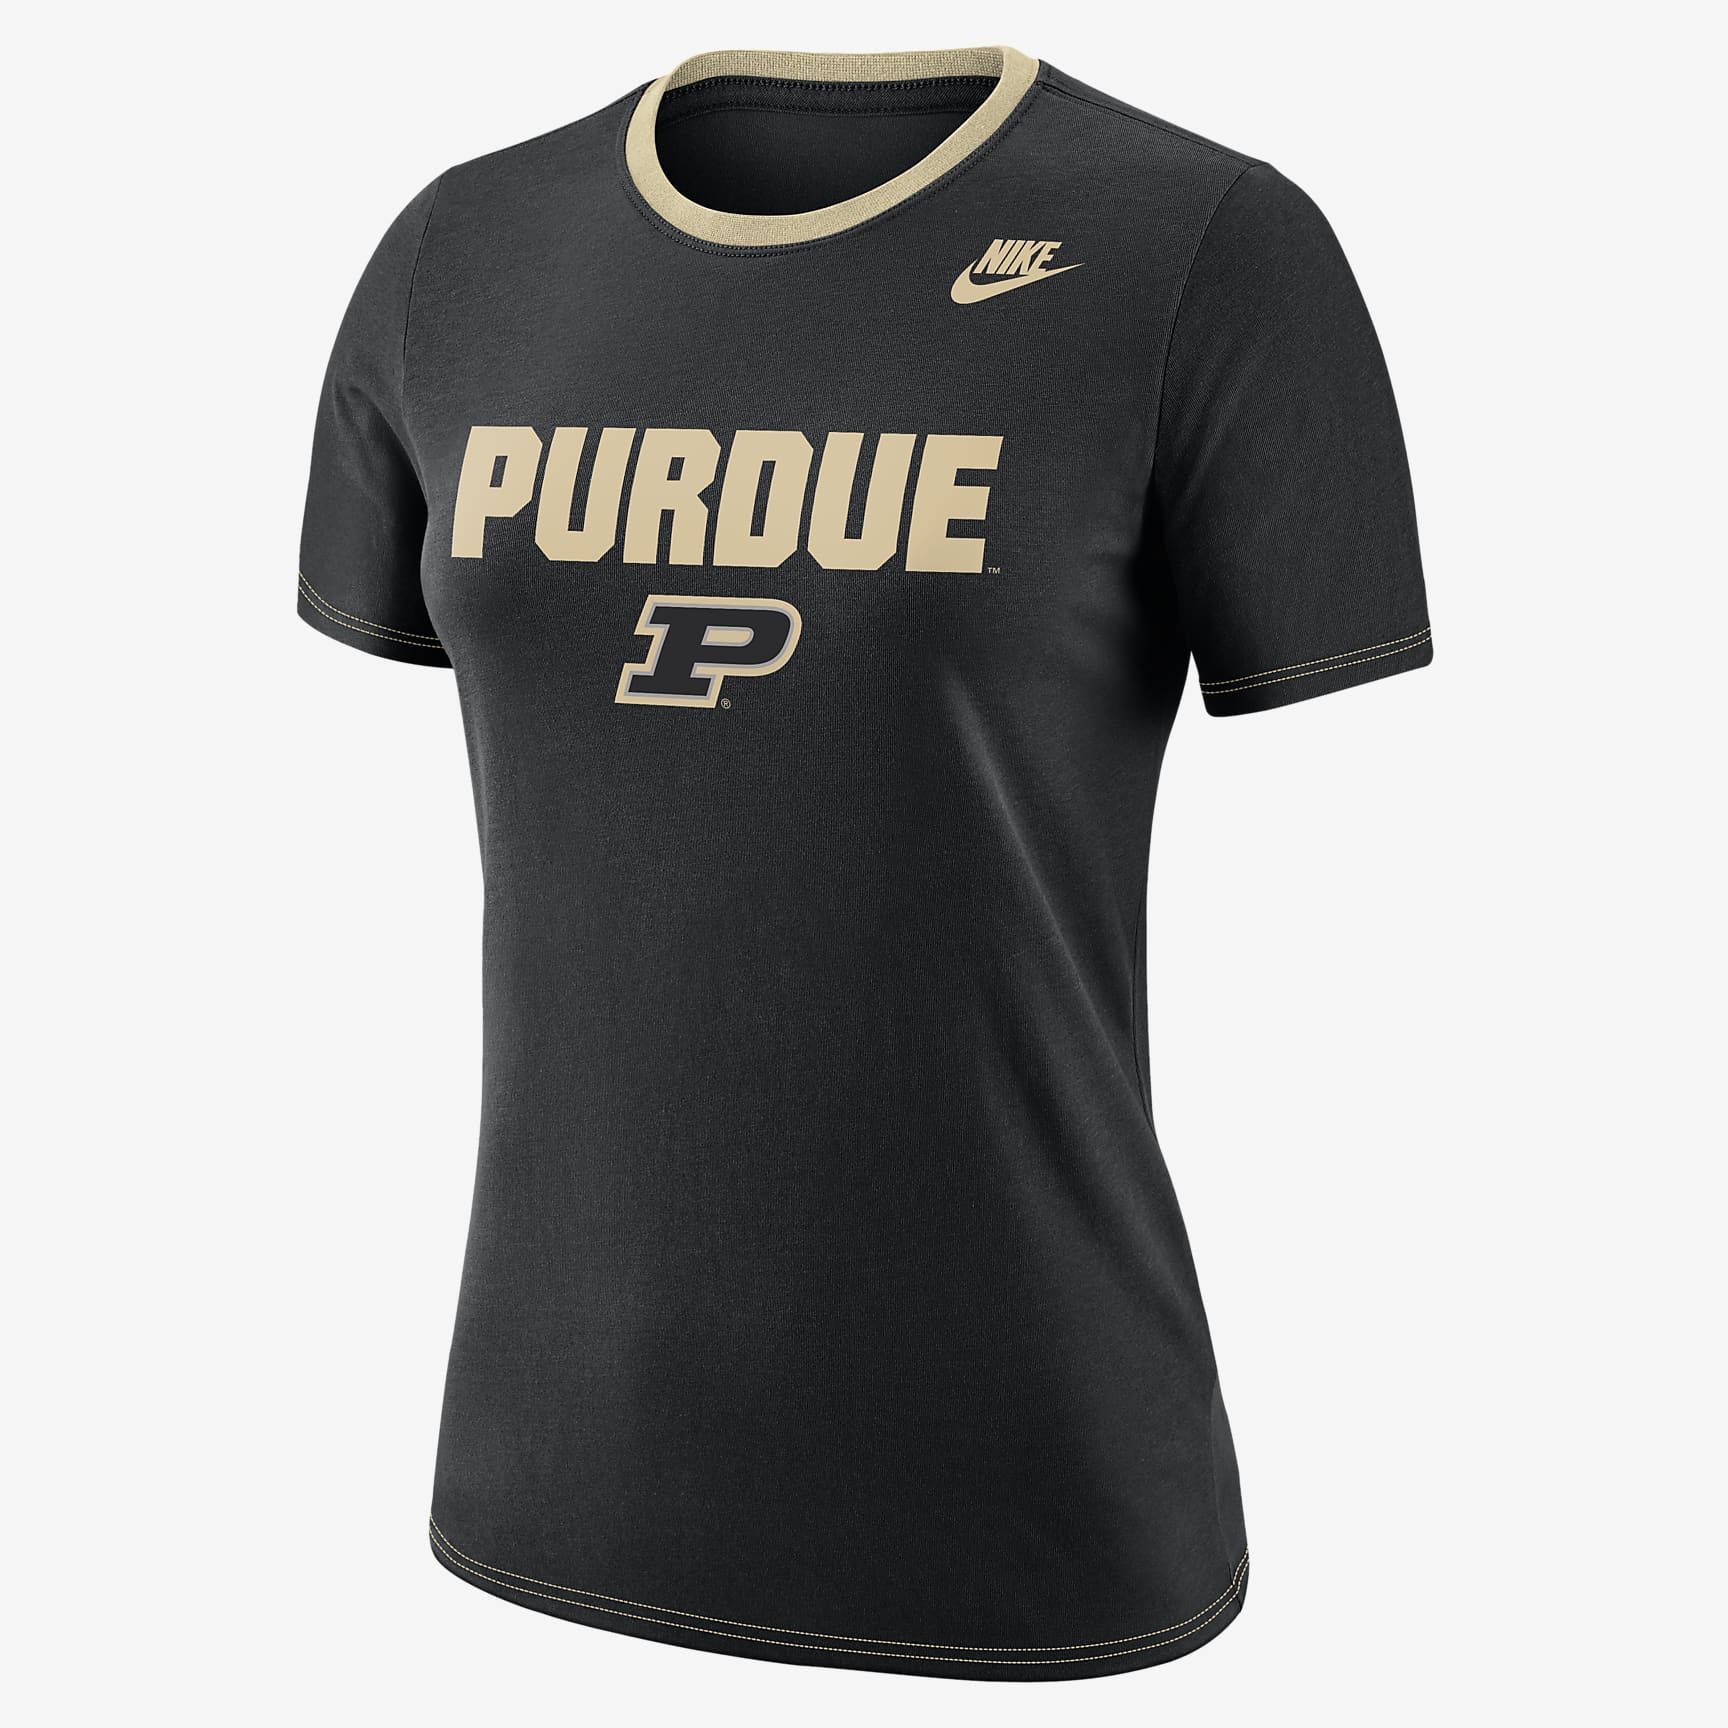 Nike College Dri-FIT (Purdue) Women's T-Shirt. Nike.com